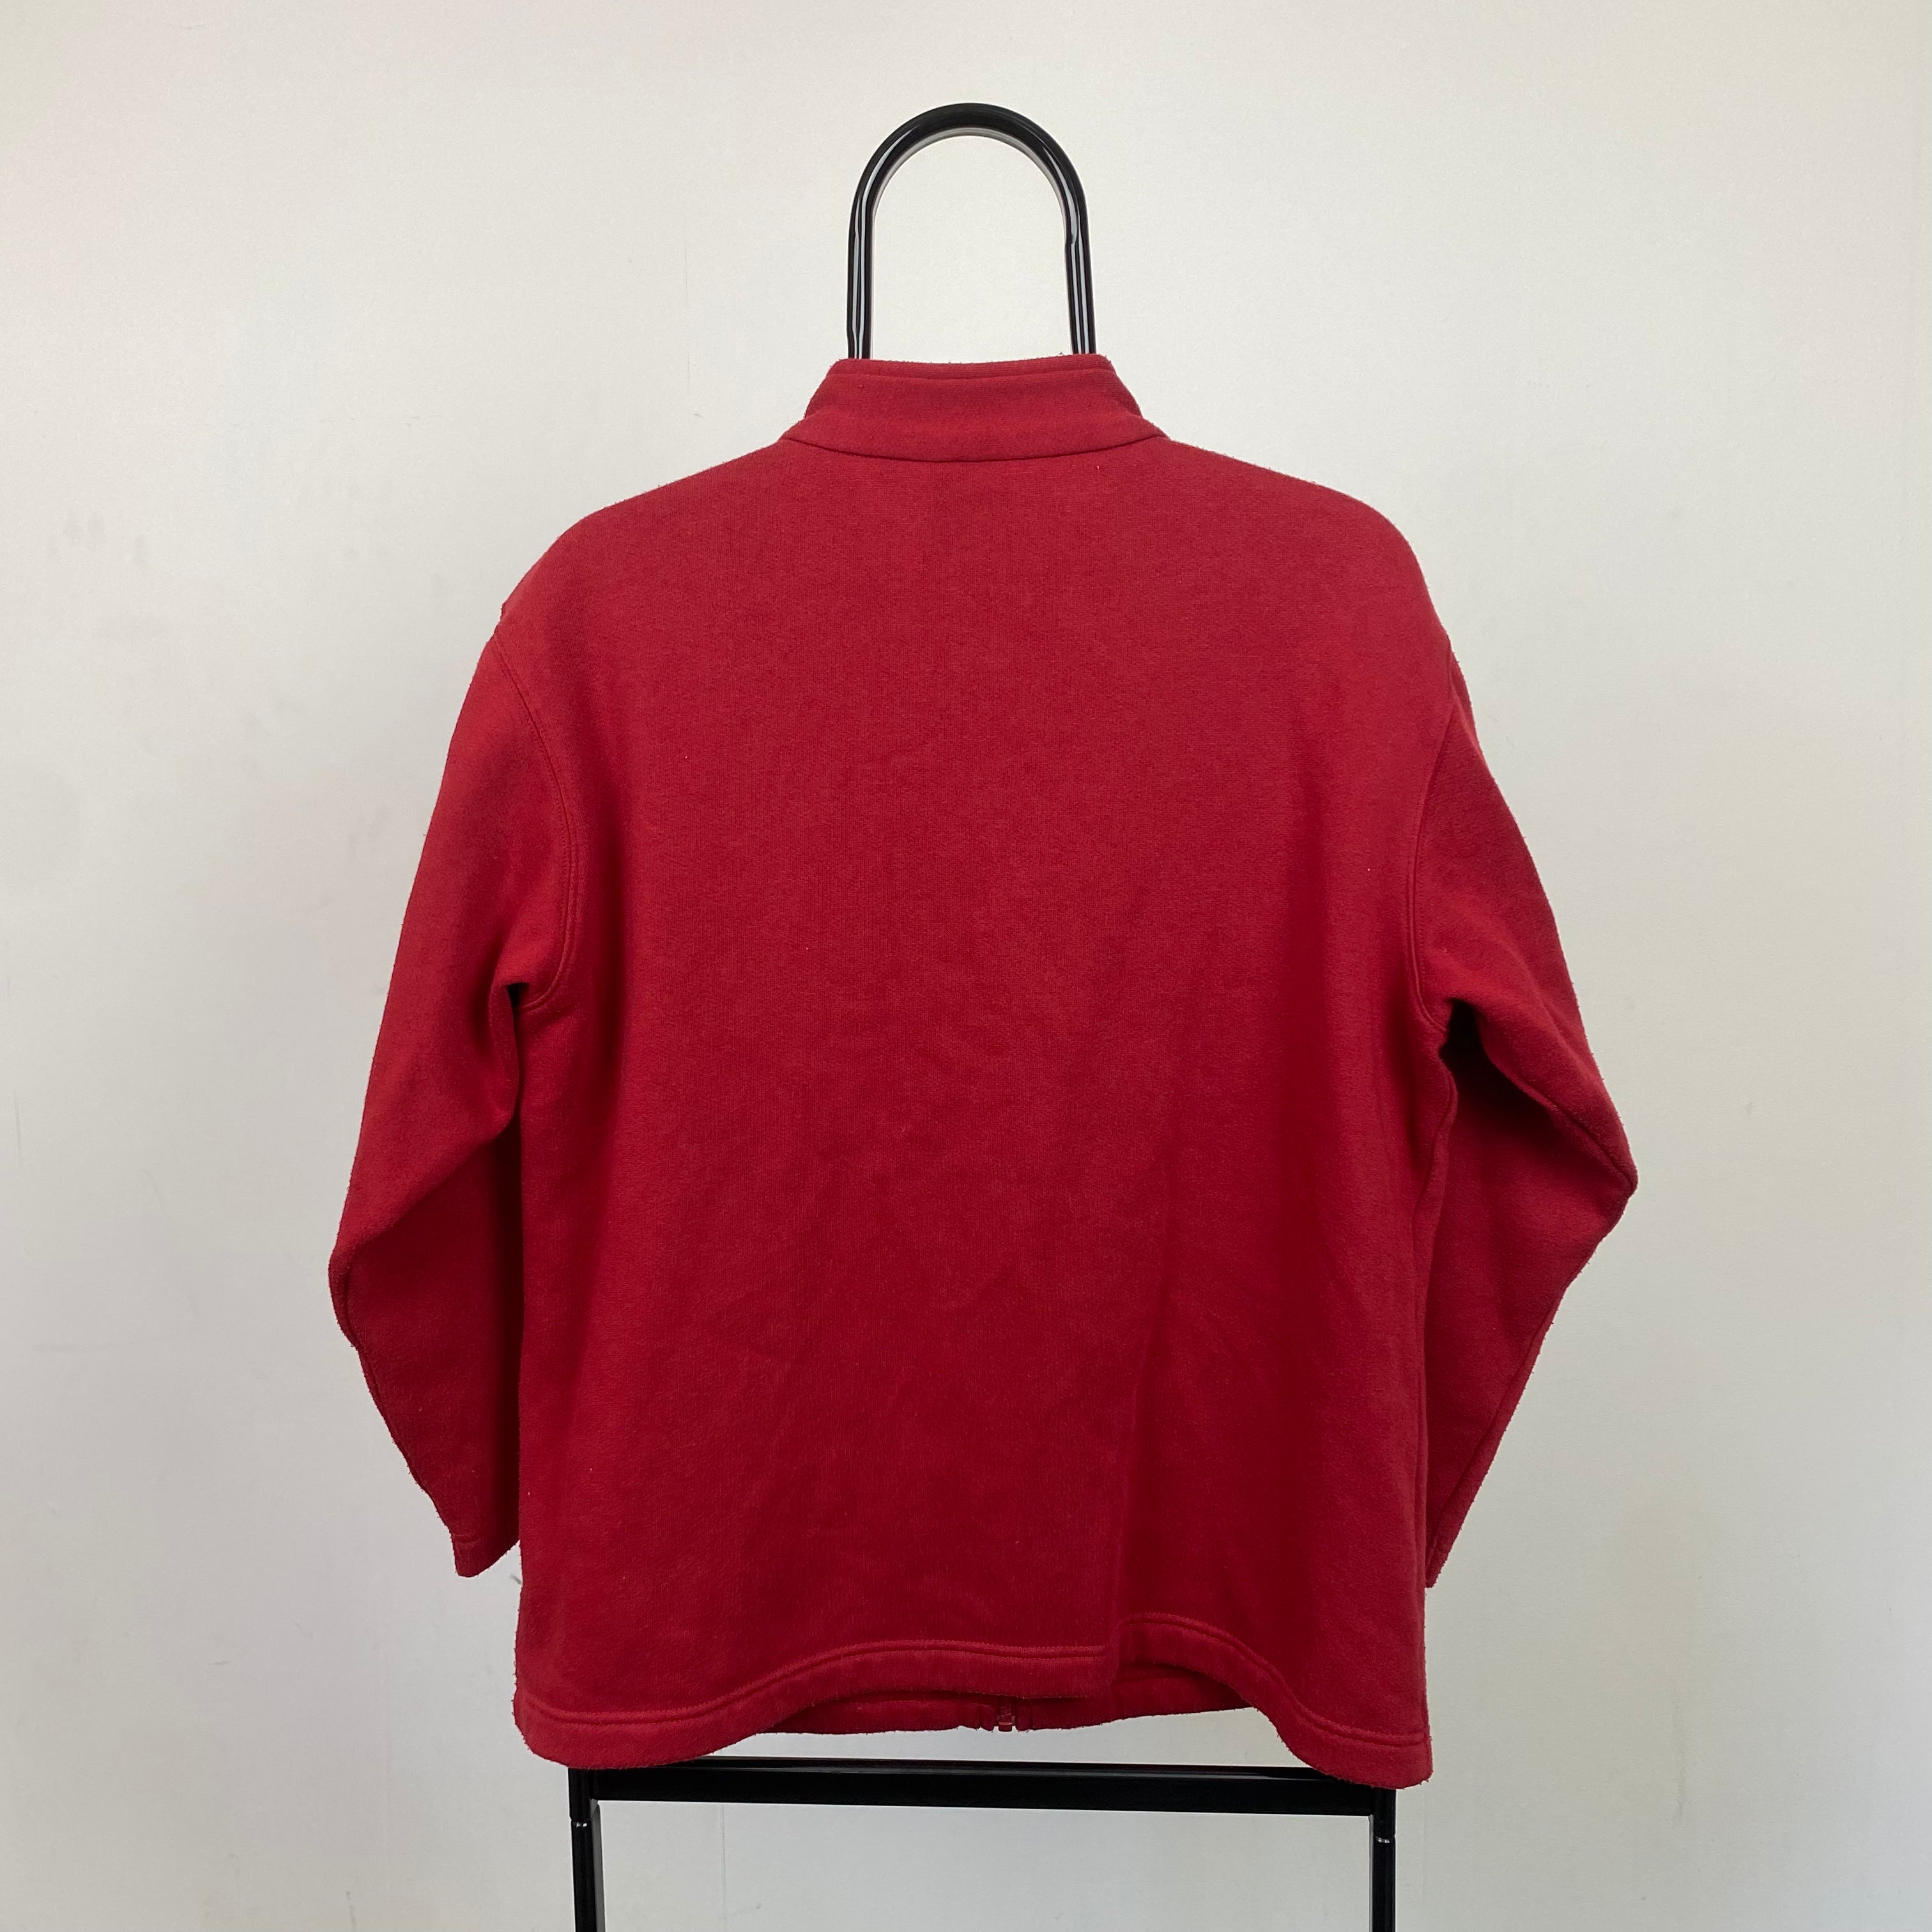 Retro Tulchan Badger Fleece Sweatshirt Red Small